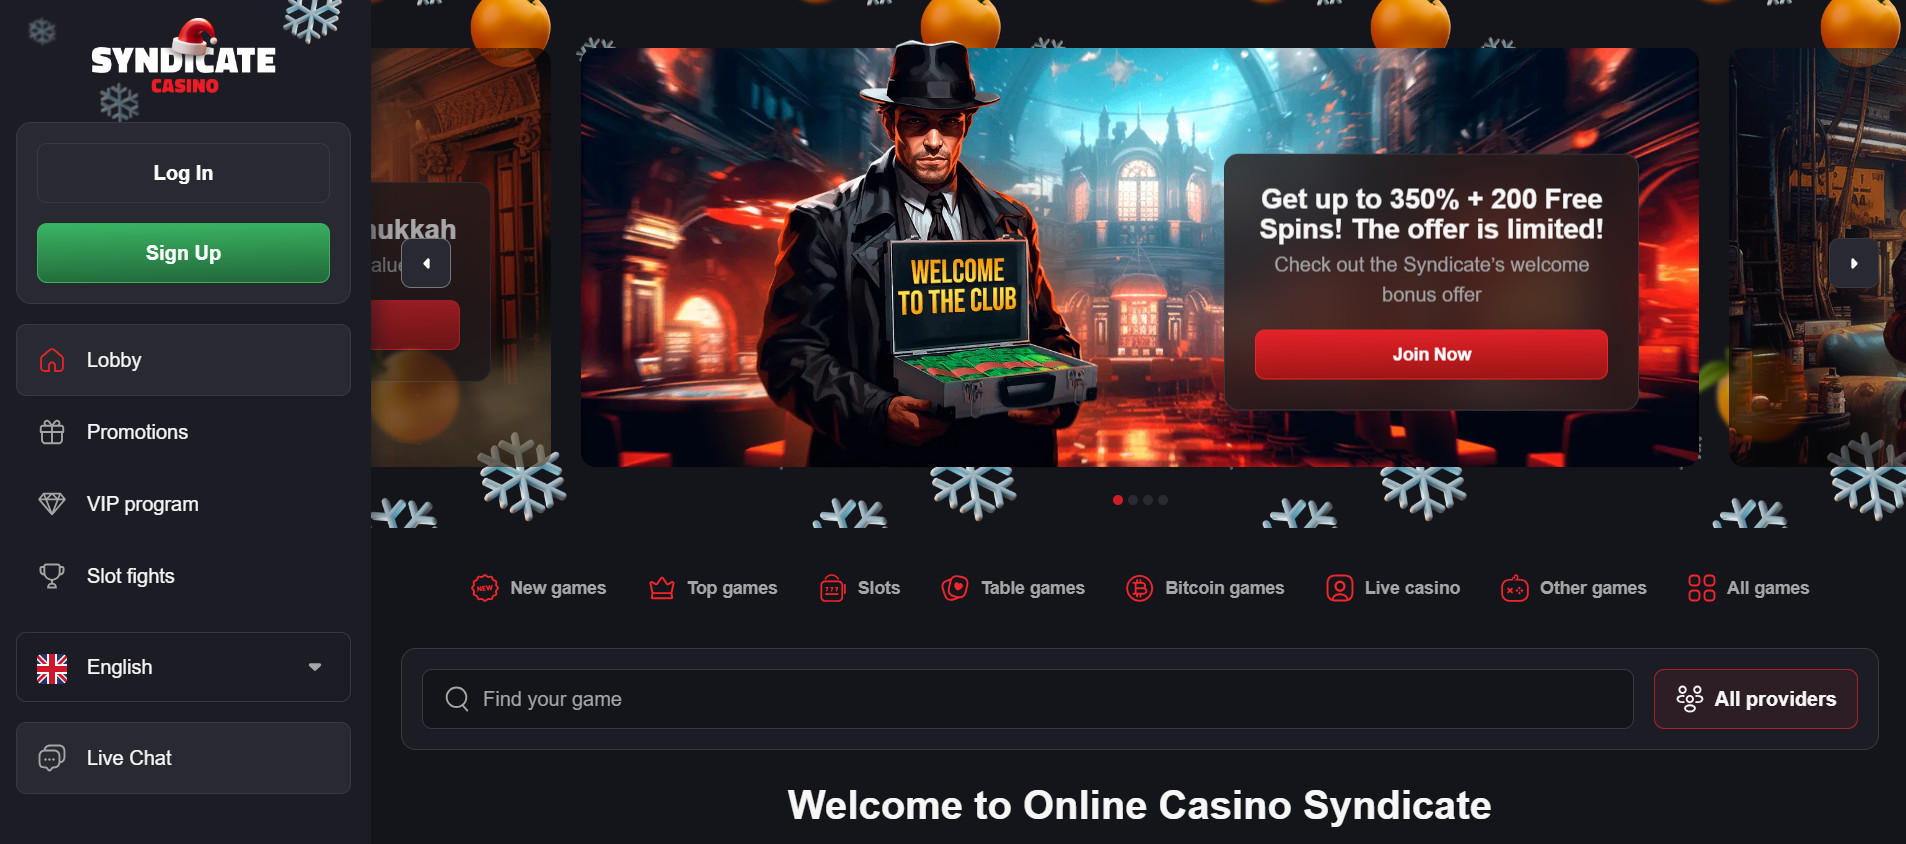 Syndicate Casino Lobby